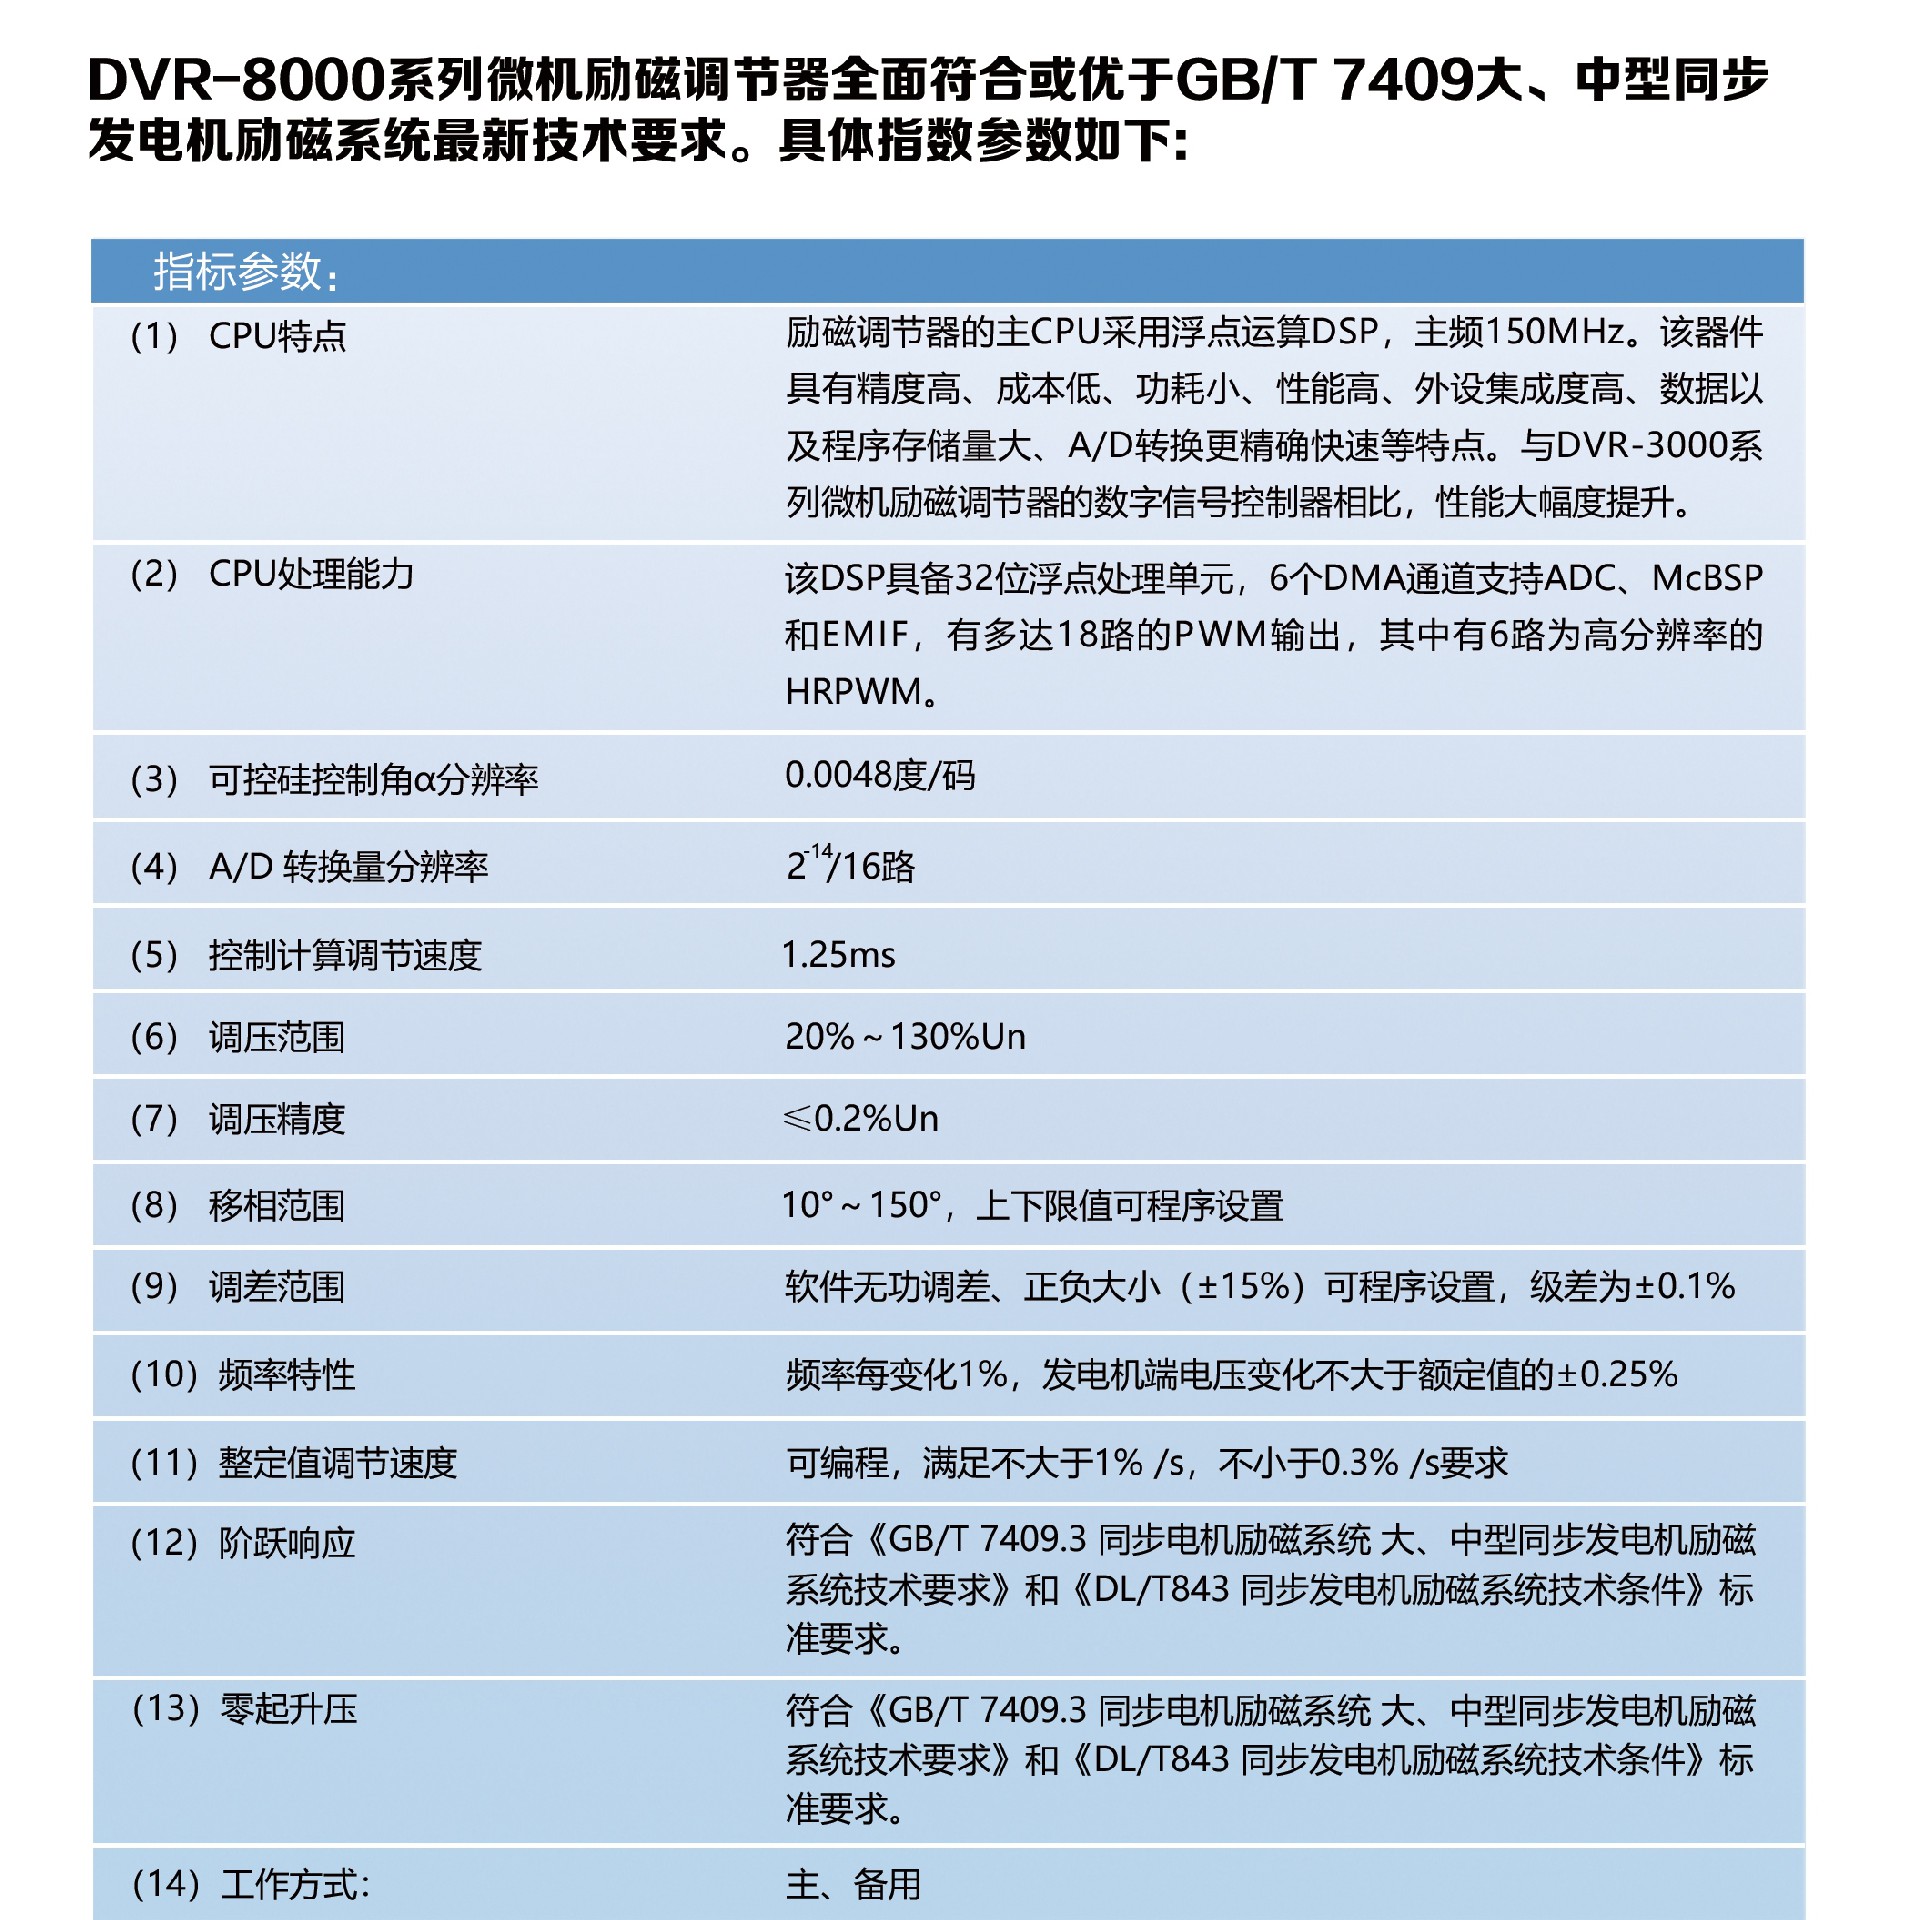 16--DVR-8000系列禁止勵磁系統_02-1.jpg